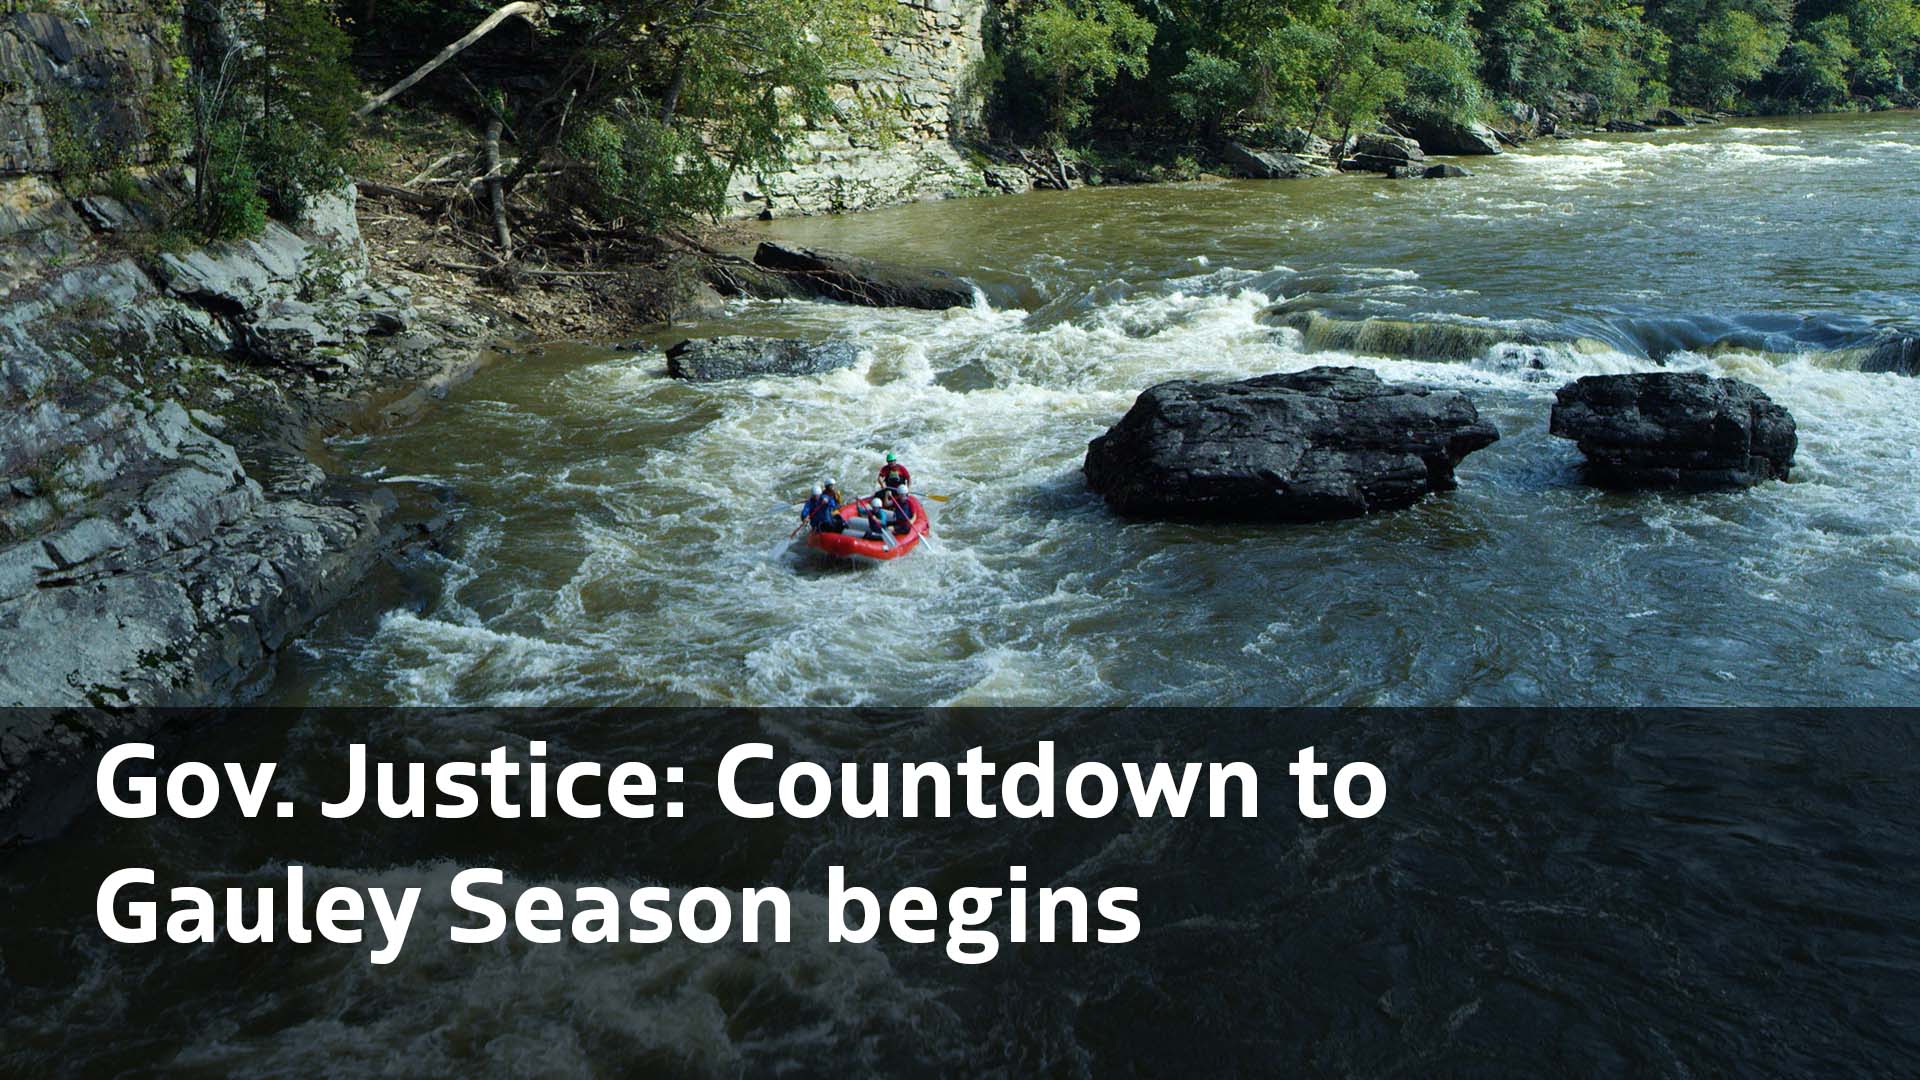 Gov. Justice Countdown to Gauley Season begins